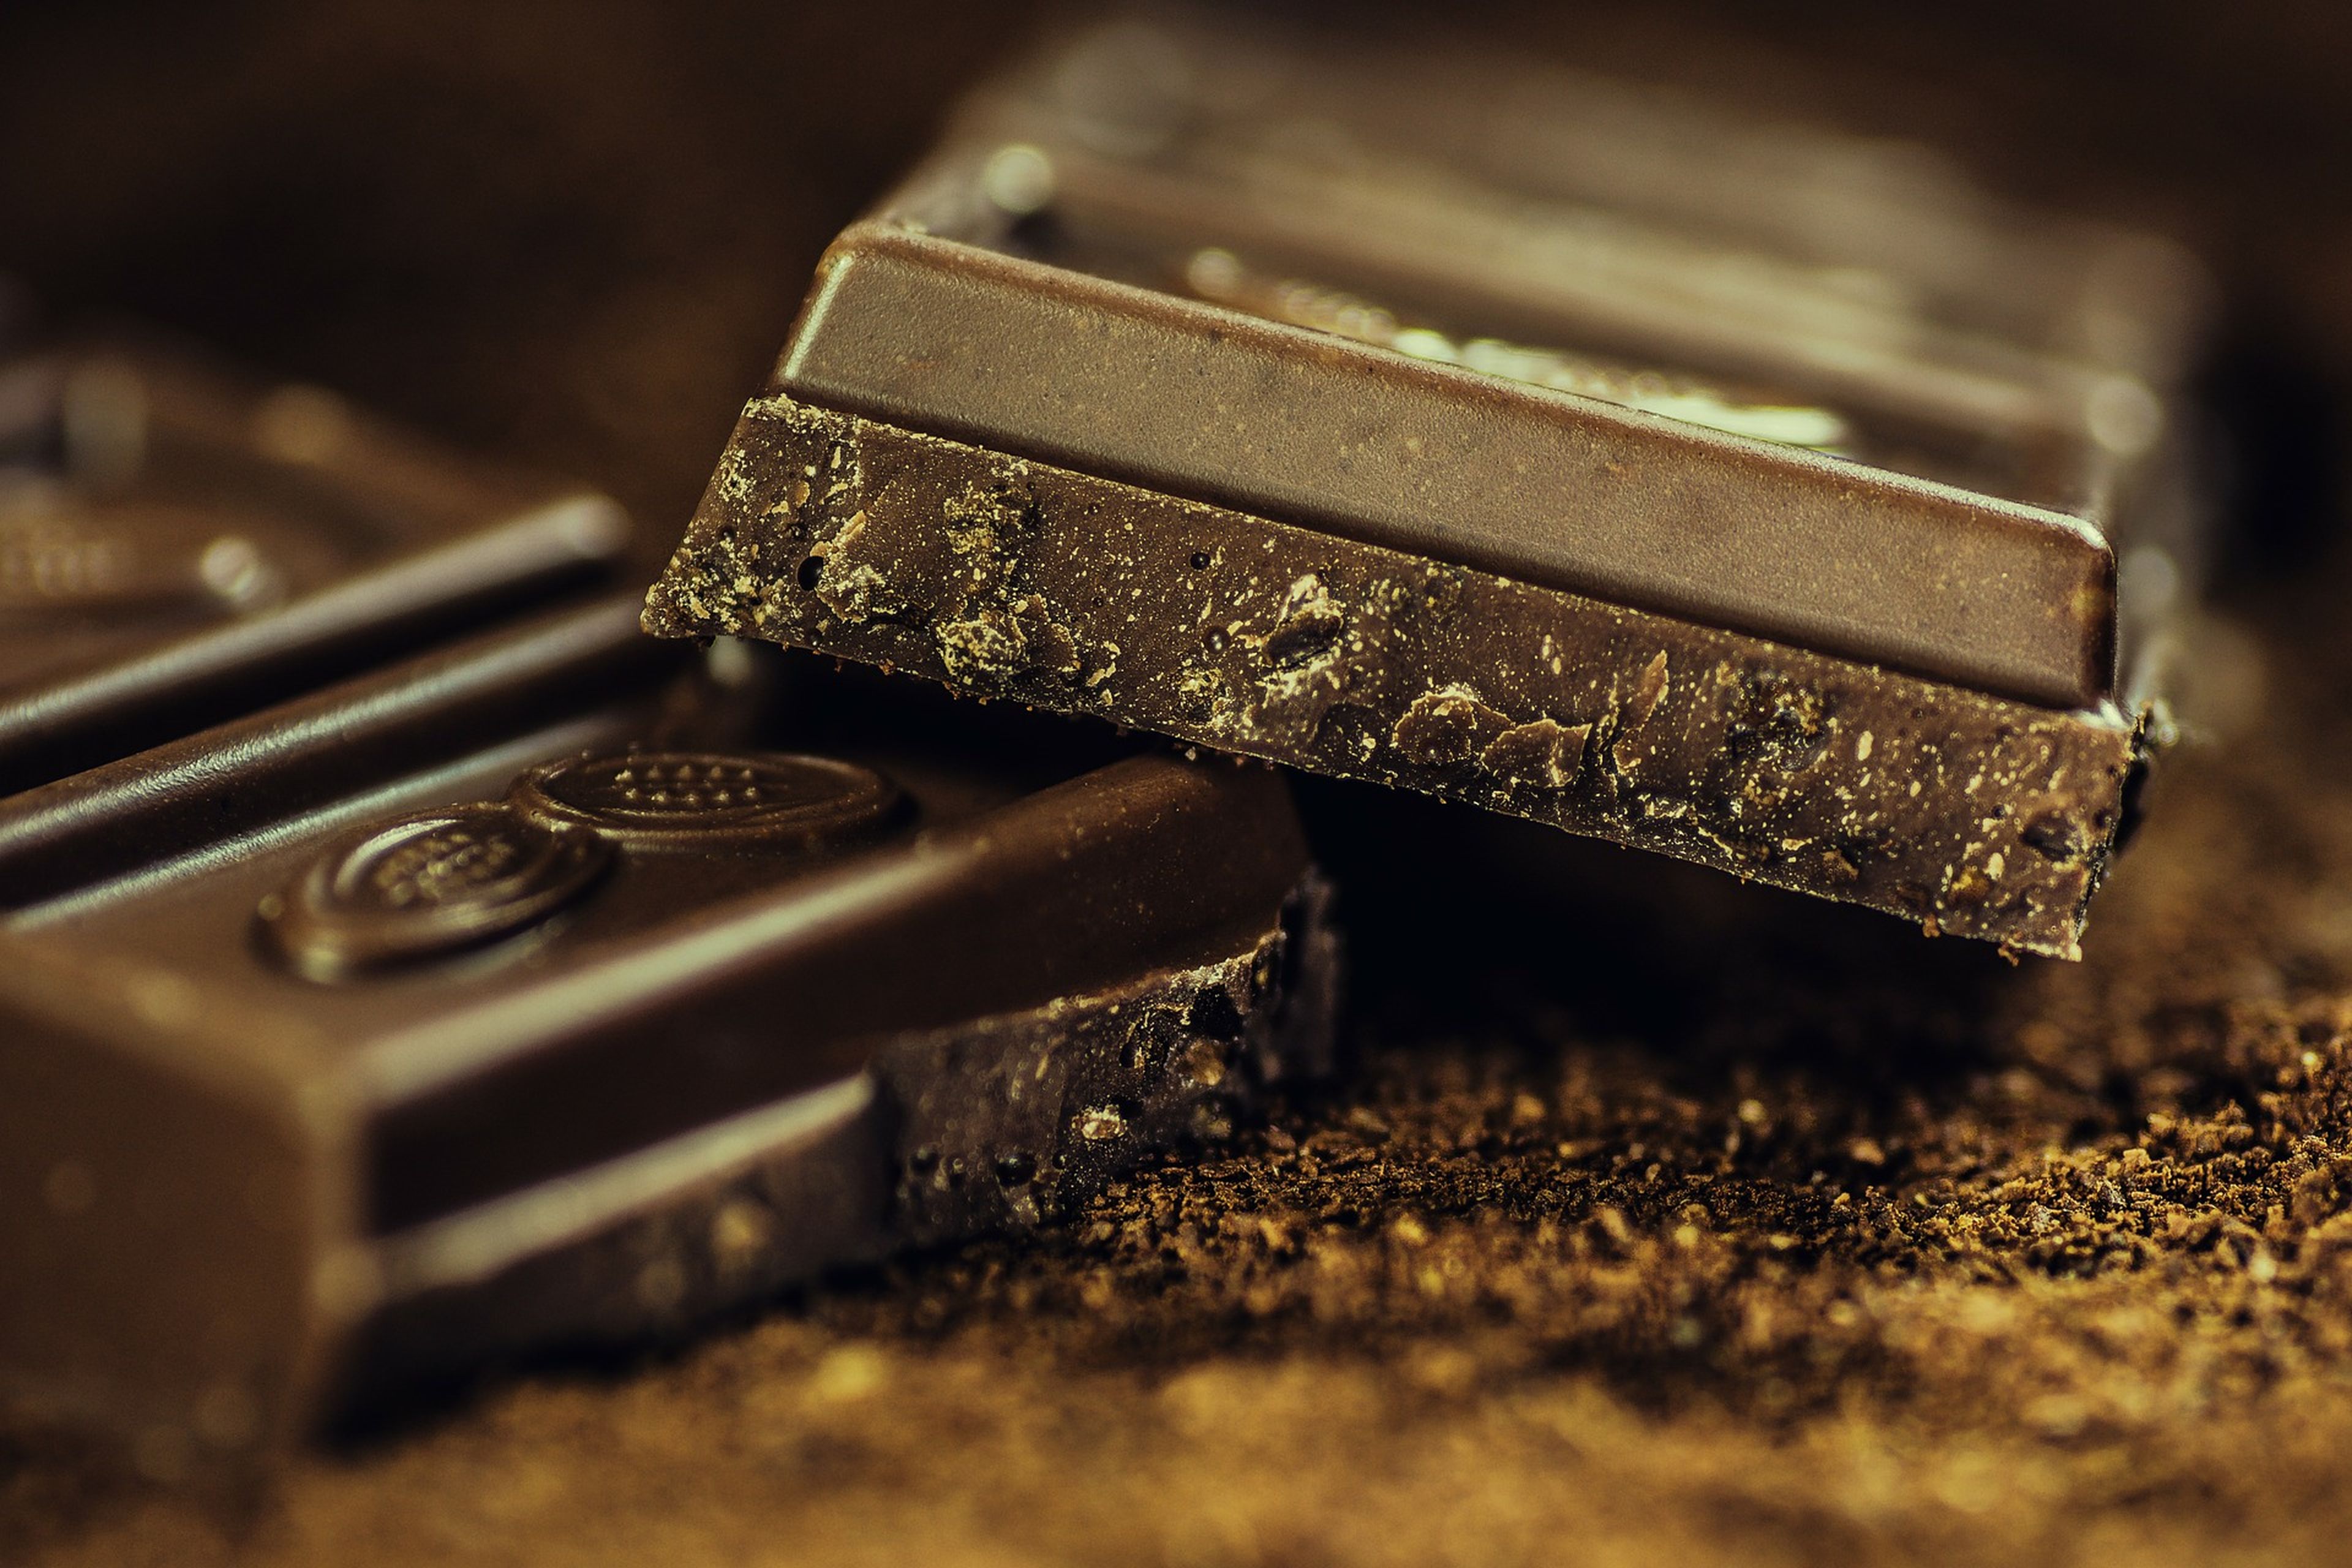 Así reacciona tu cerebro cada vez que comes chocolate